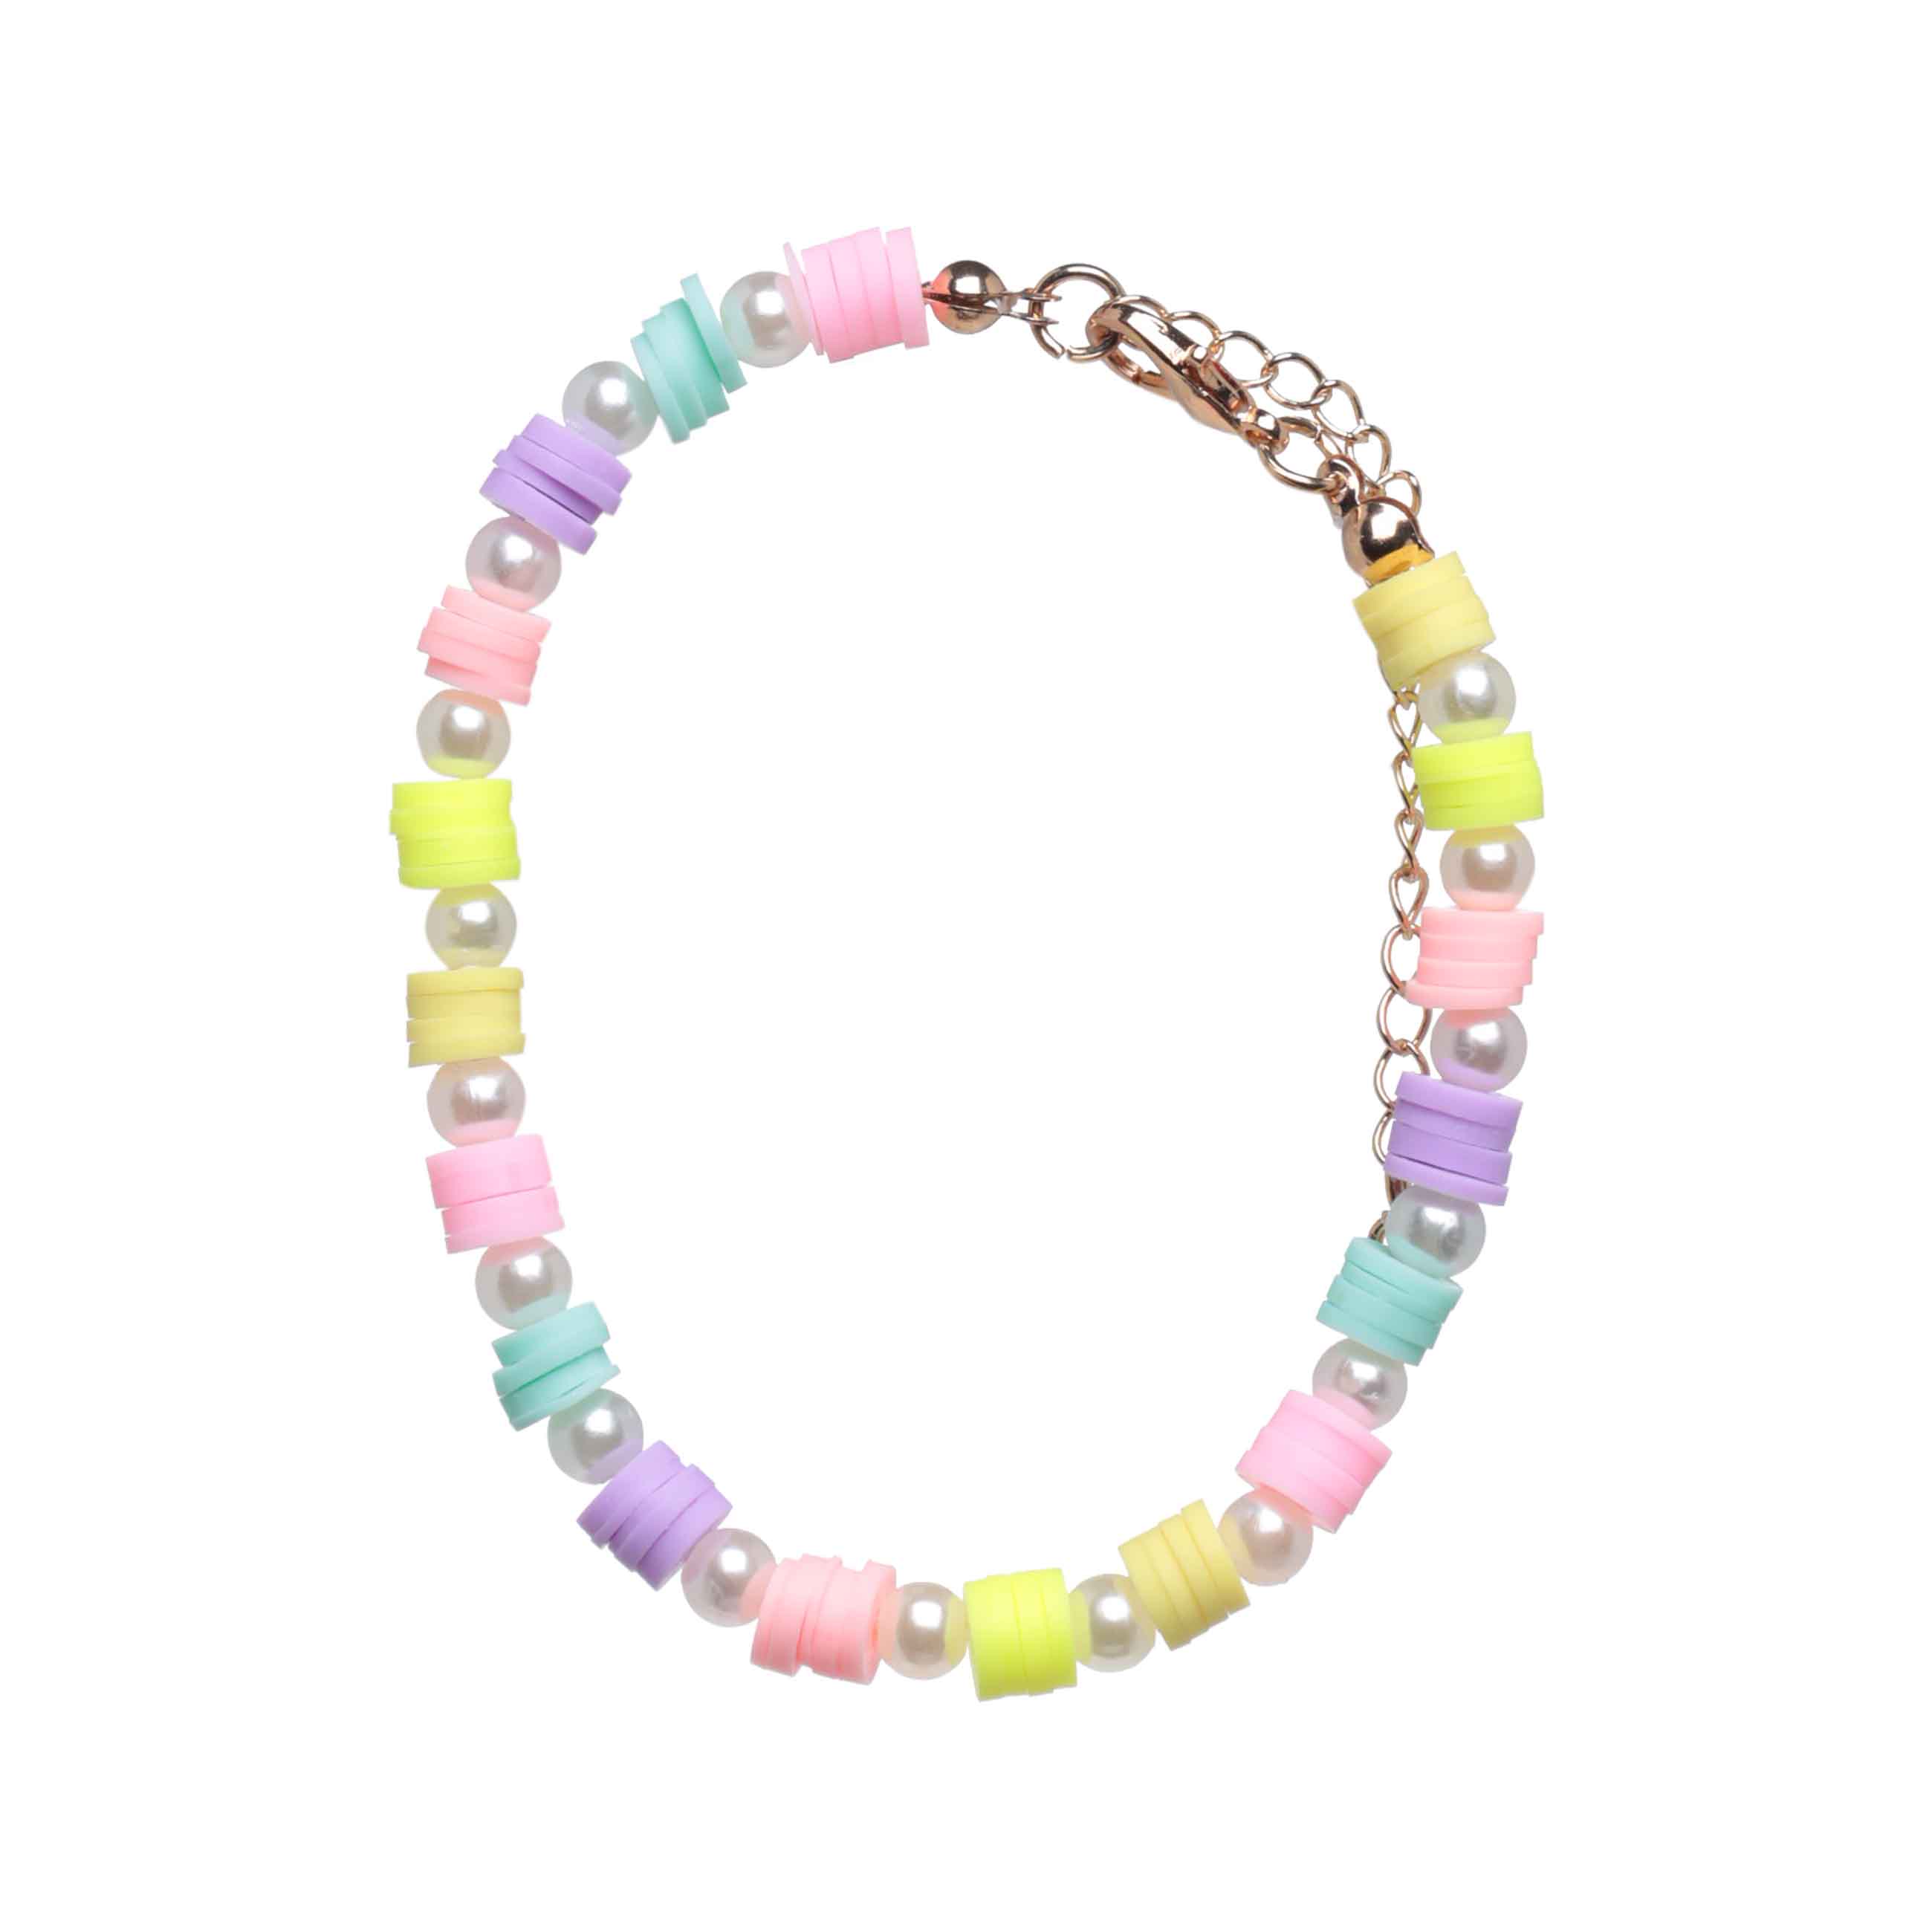 Bracelet, 23 cm, 3 pieces, for children, metal / plastic, colored, Smileys and beads, Pearl color изображение № 2